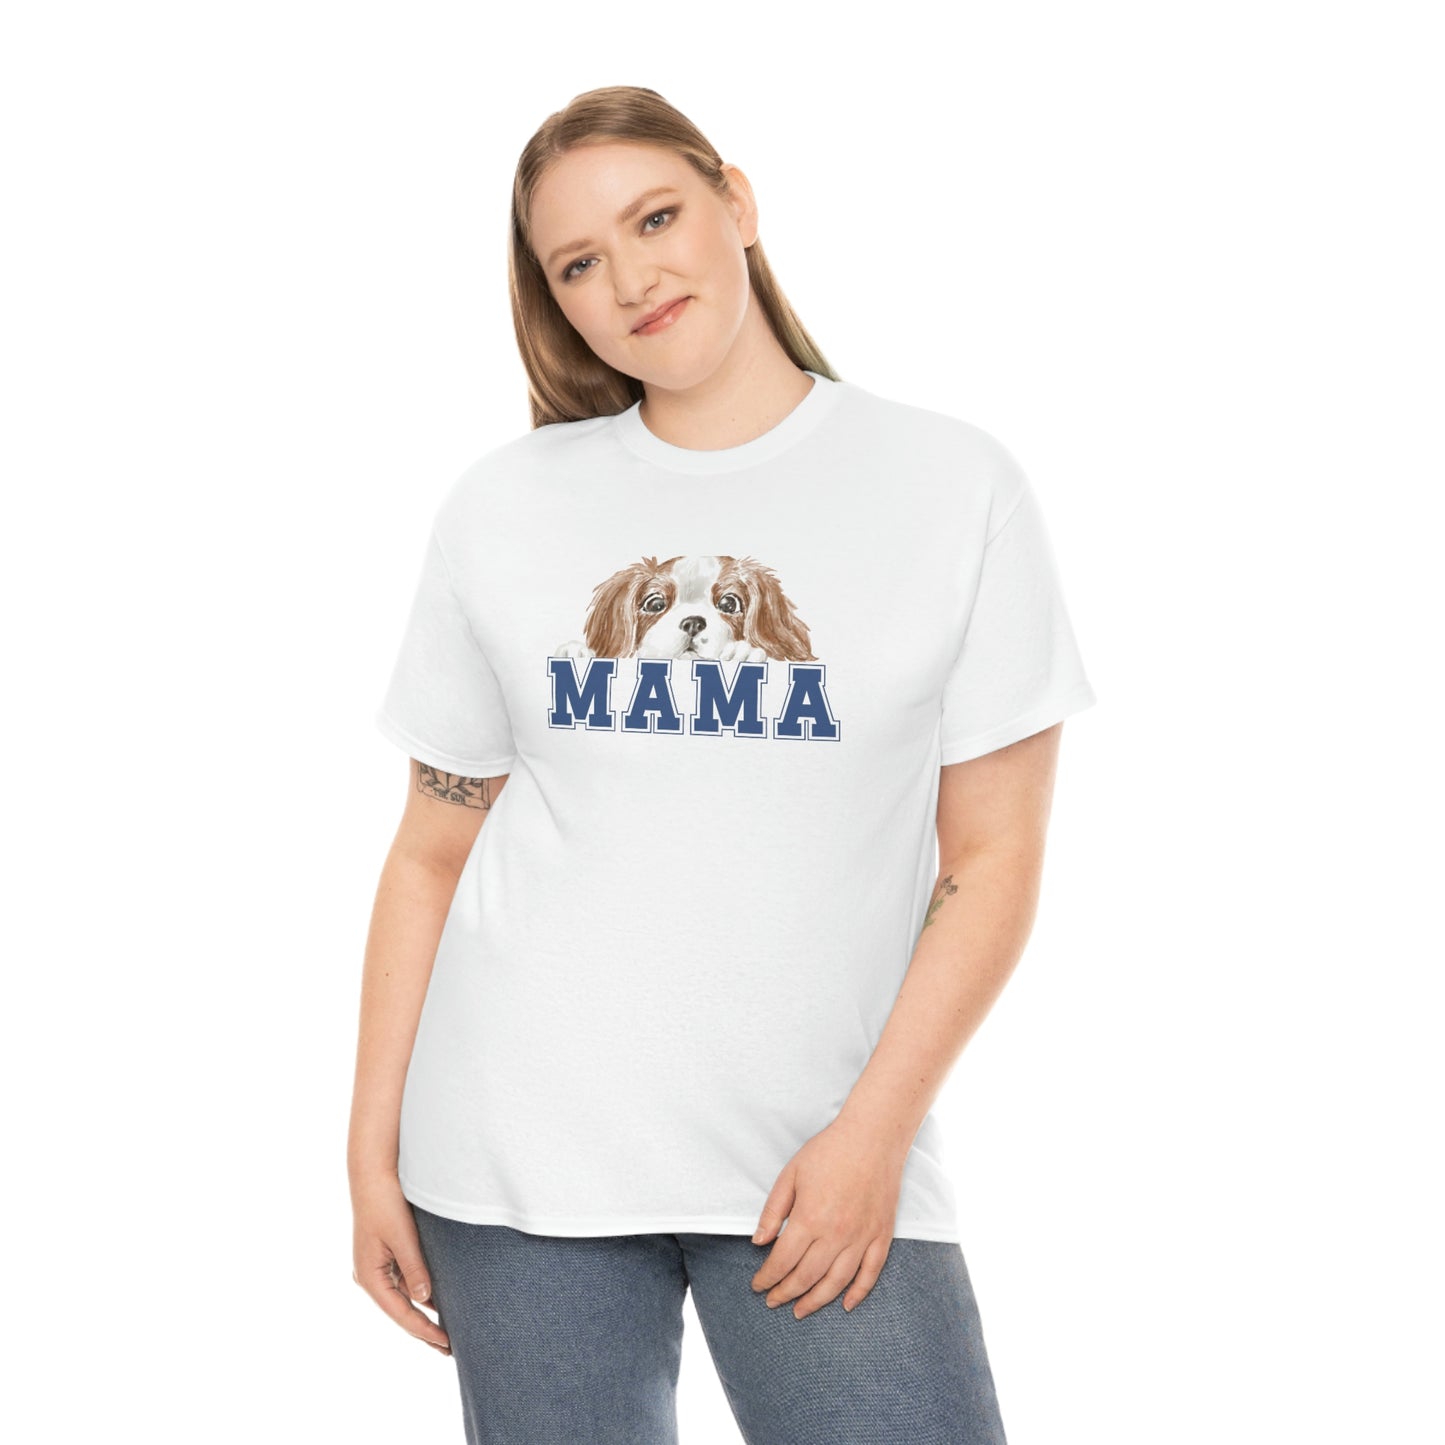 Dog MAMA Cute Dog/Puppy Graphic tee shirt